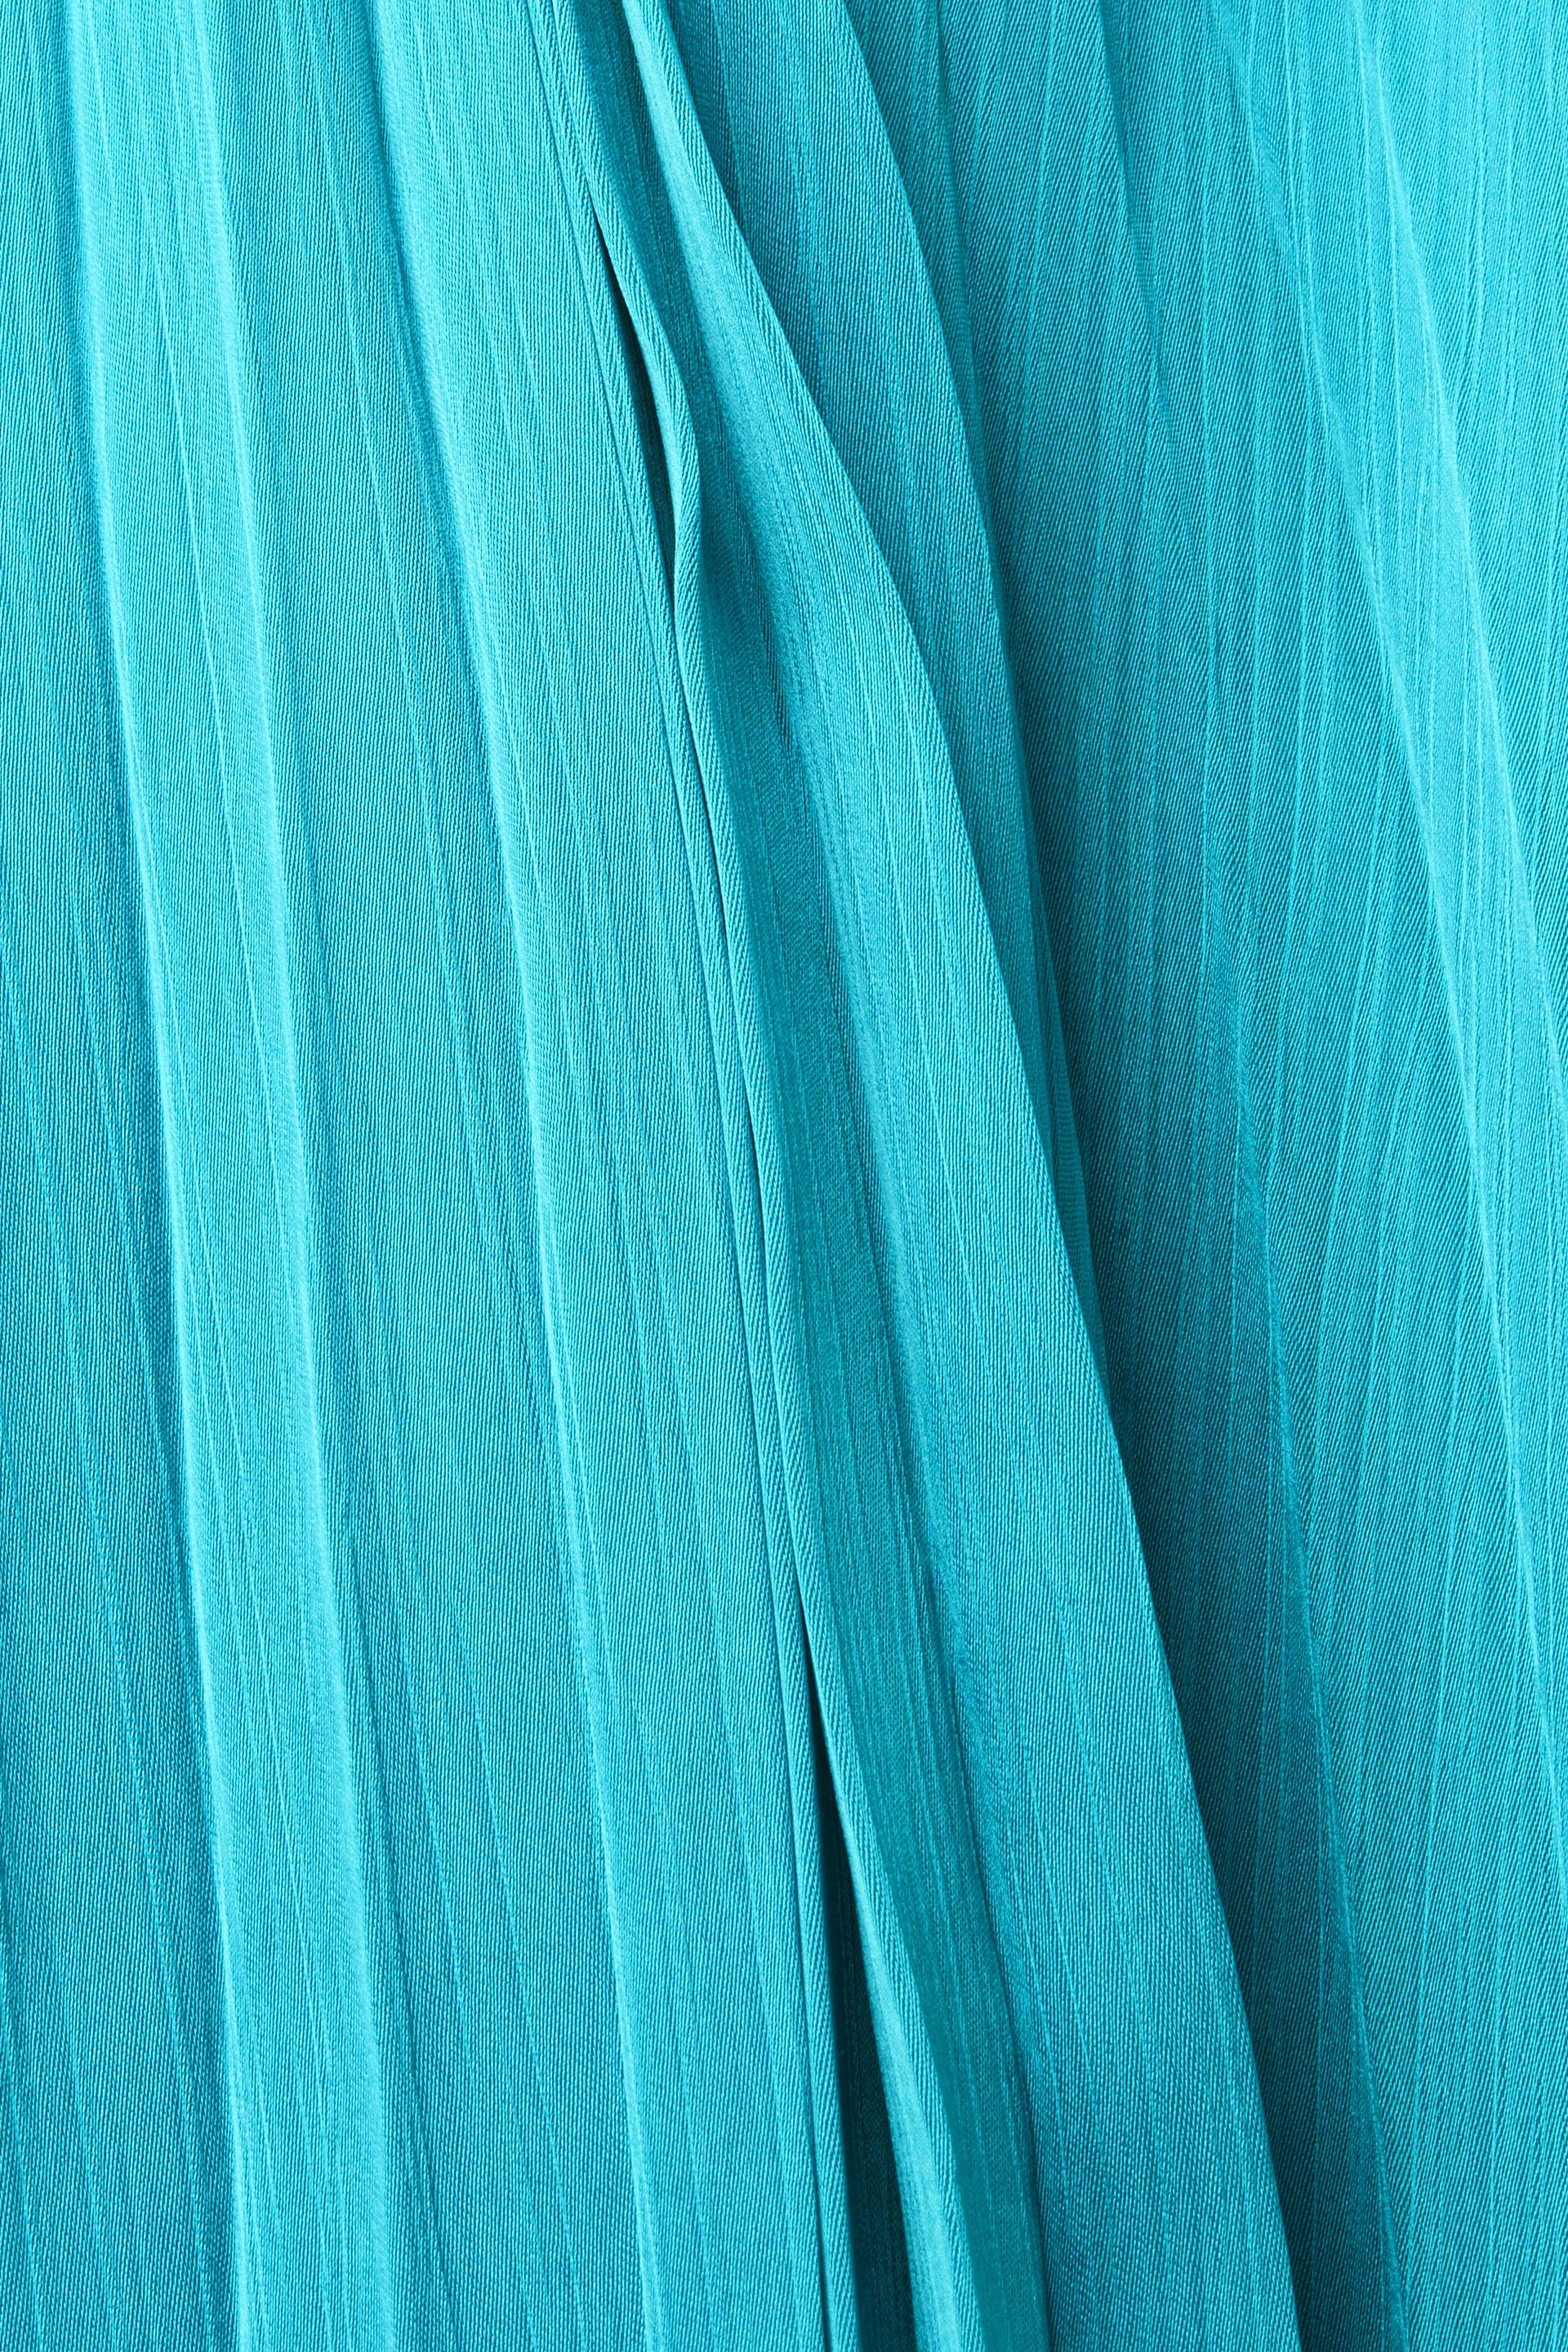 Esprit - Pleated satin dress, Turquoise, large image number 3